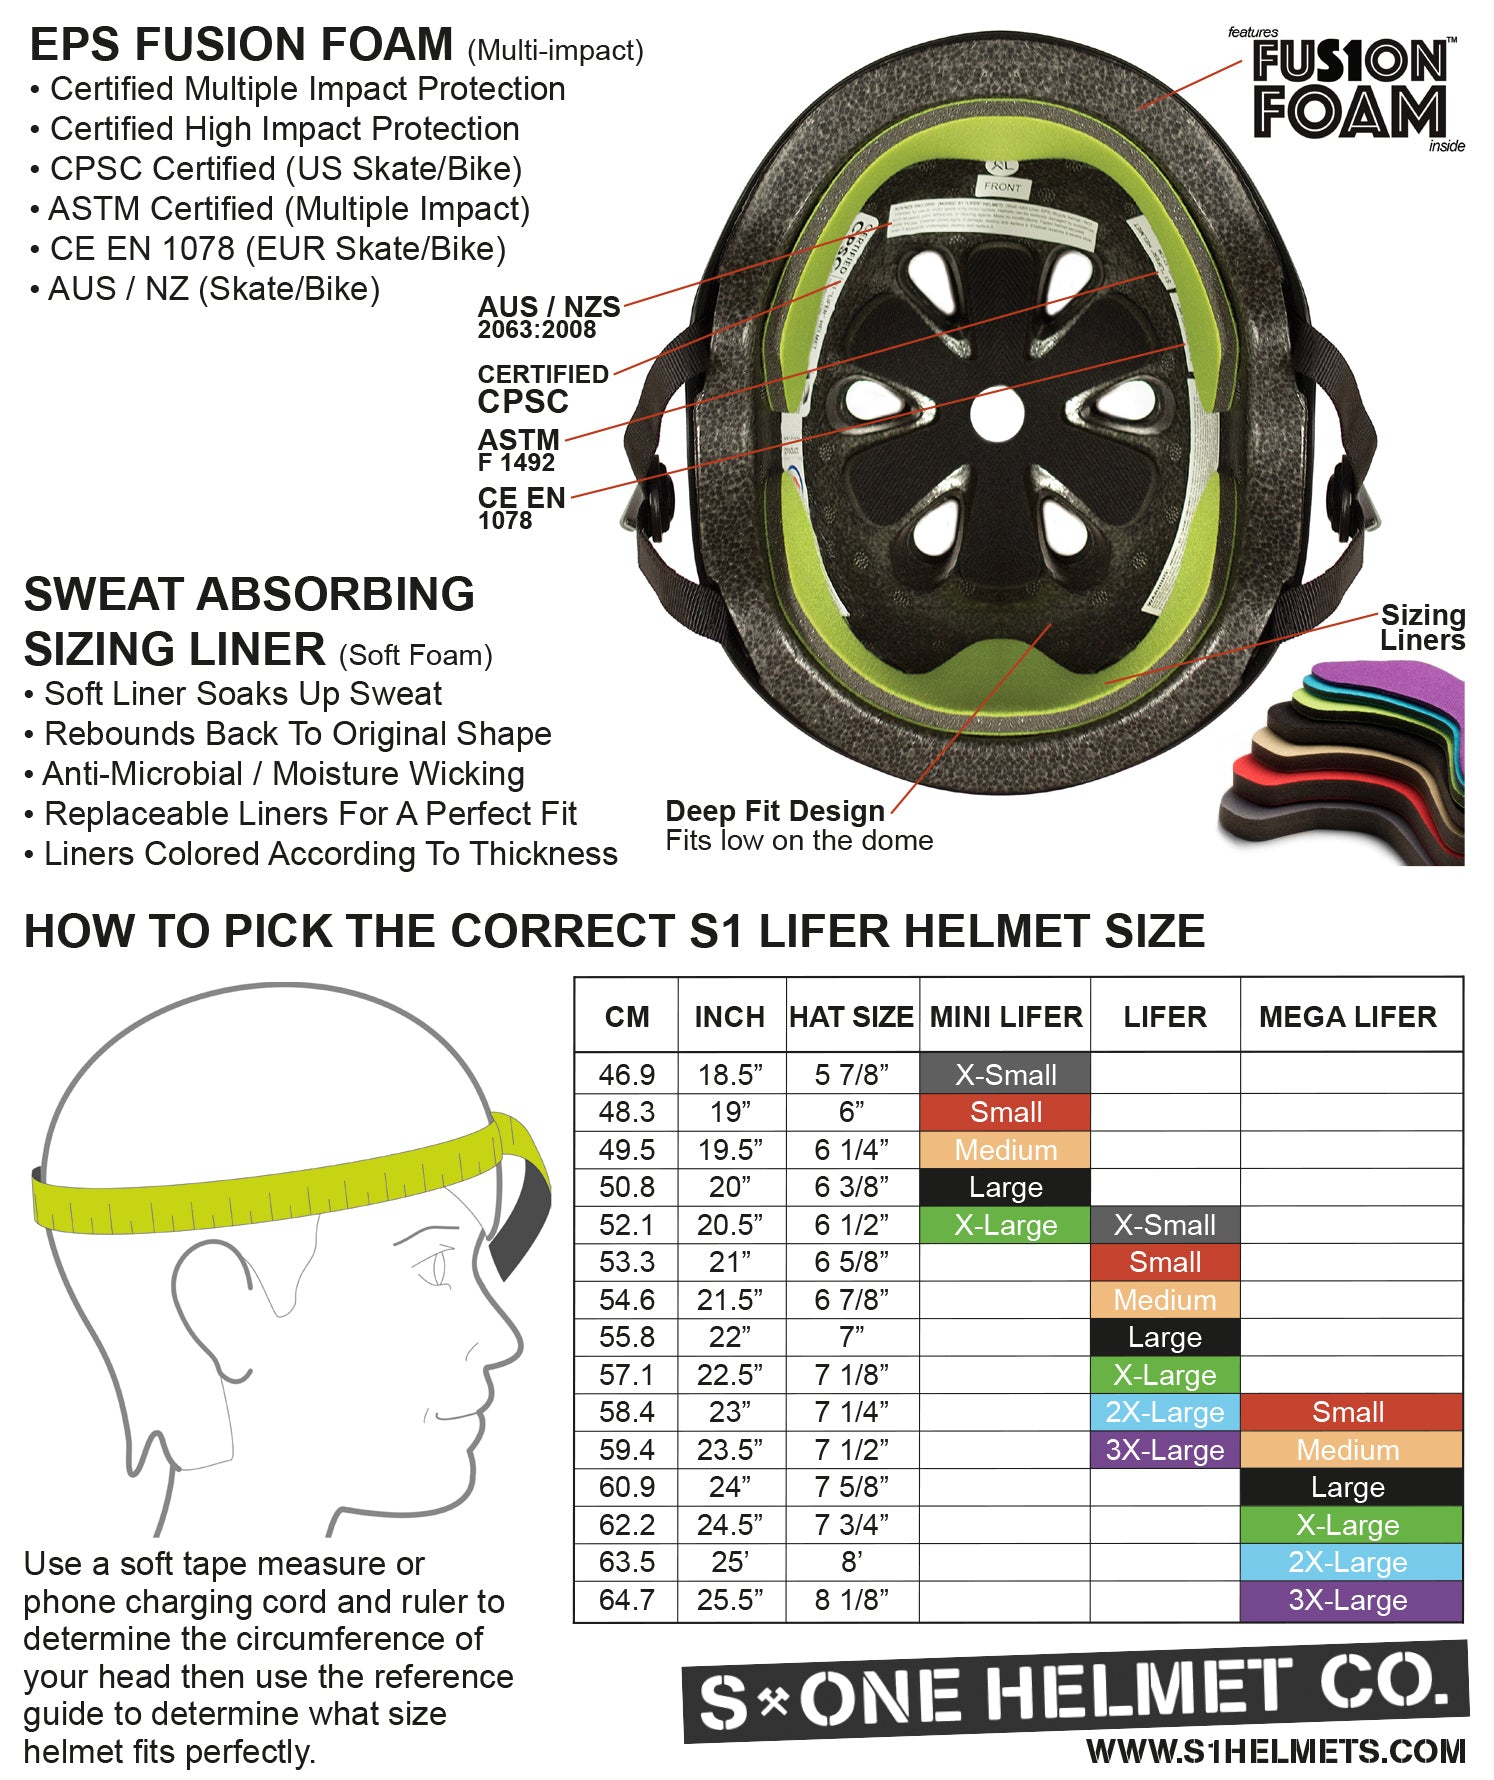 S1 Lifer Matte Kelly Green Helmet |SAFETY GEAR |$80.00 |TSP The Shop | S1 Lifer Matte Kelly Green Helmet | The Shop Pro Scooter Lab